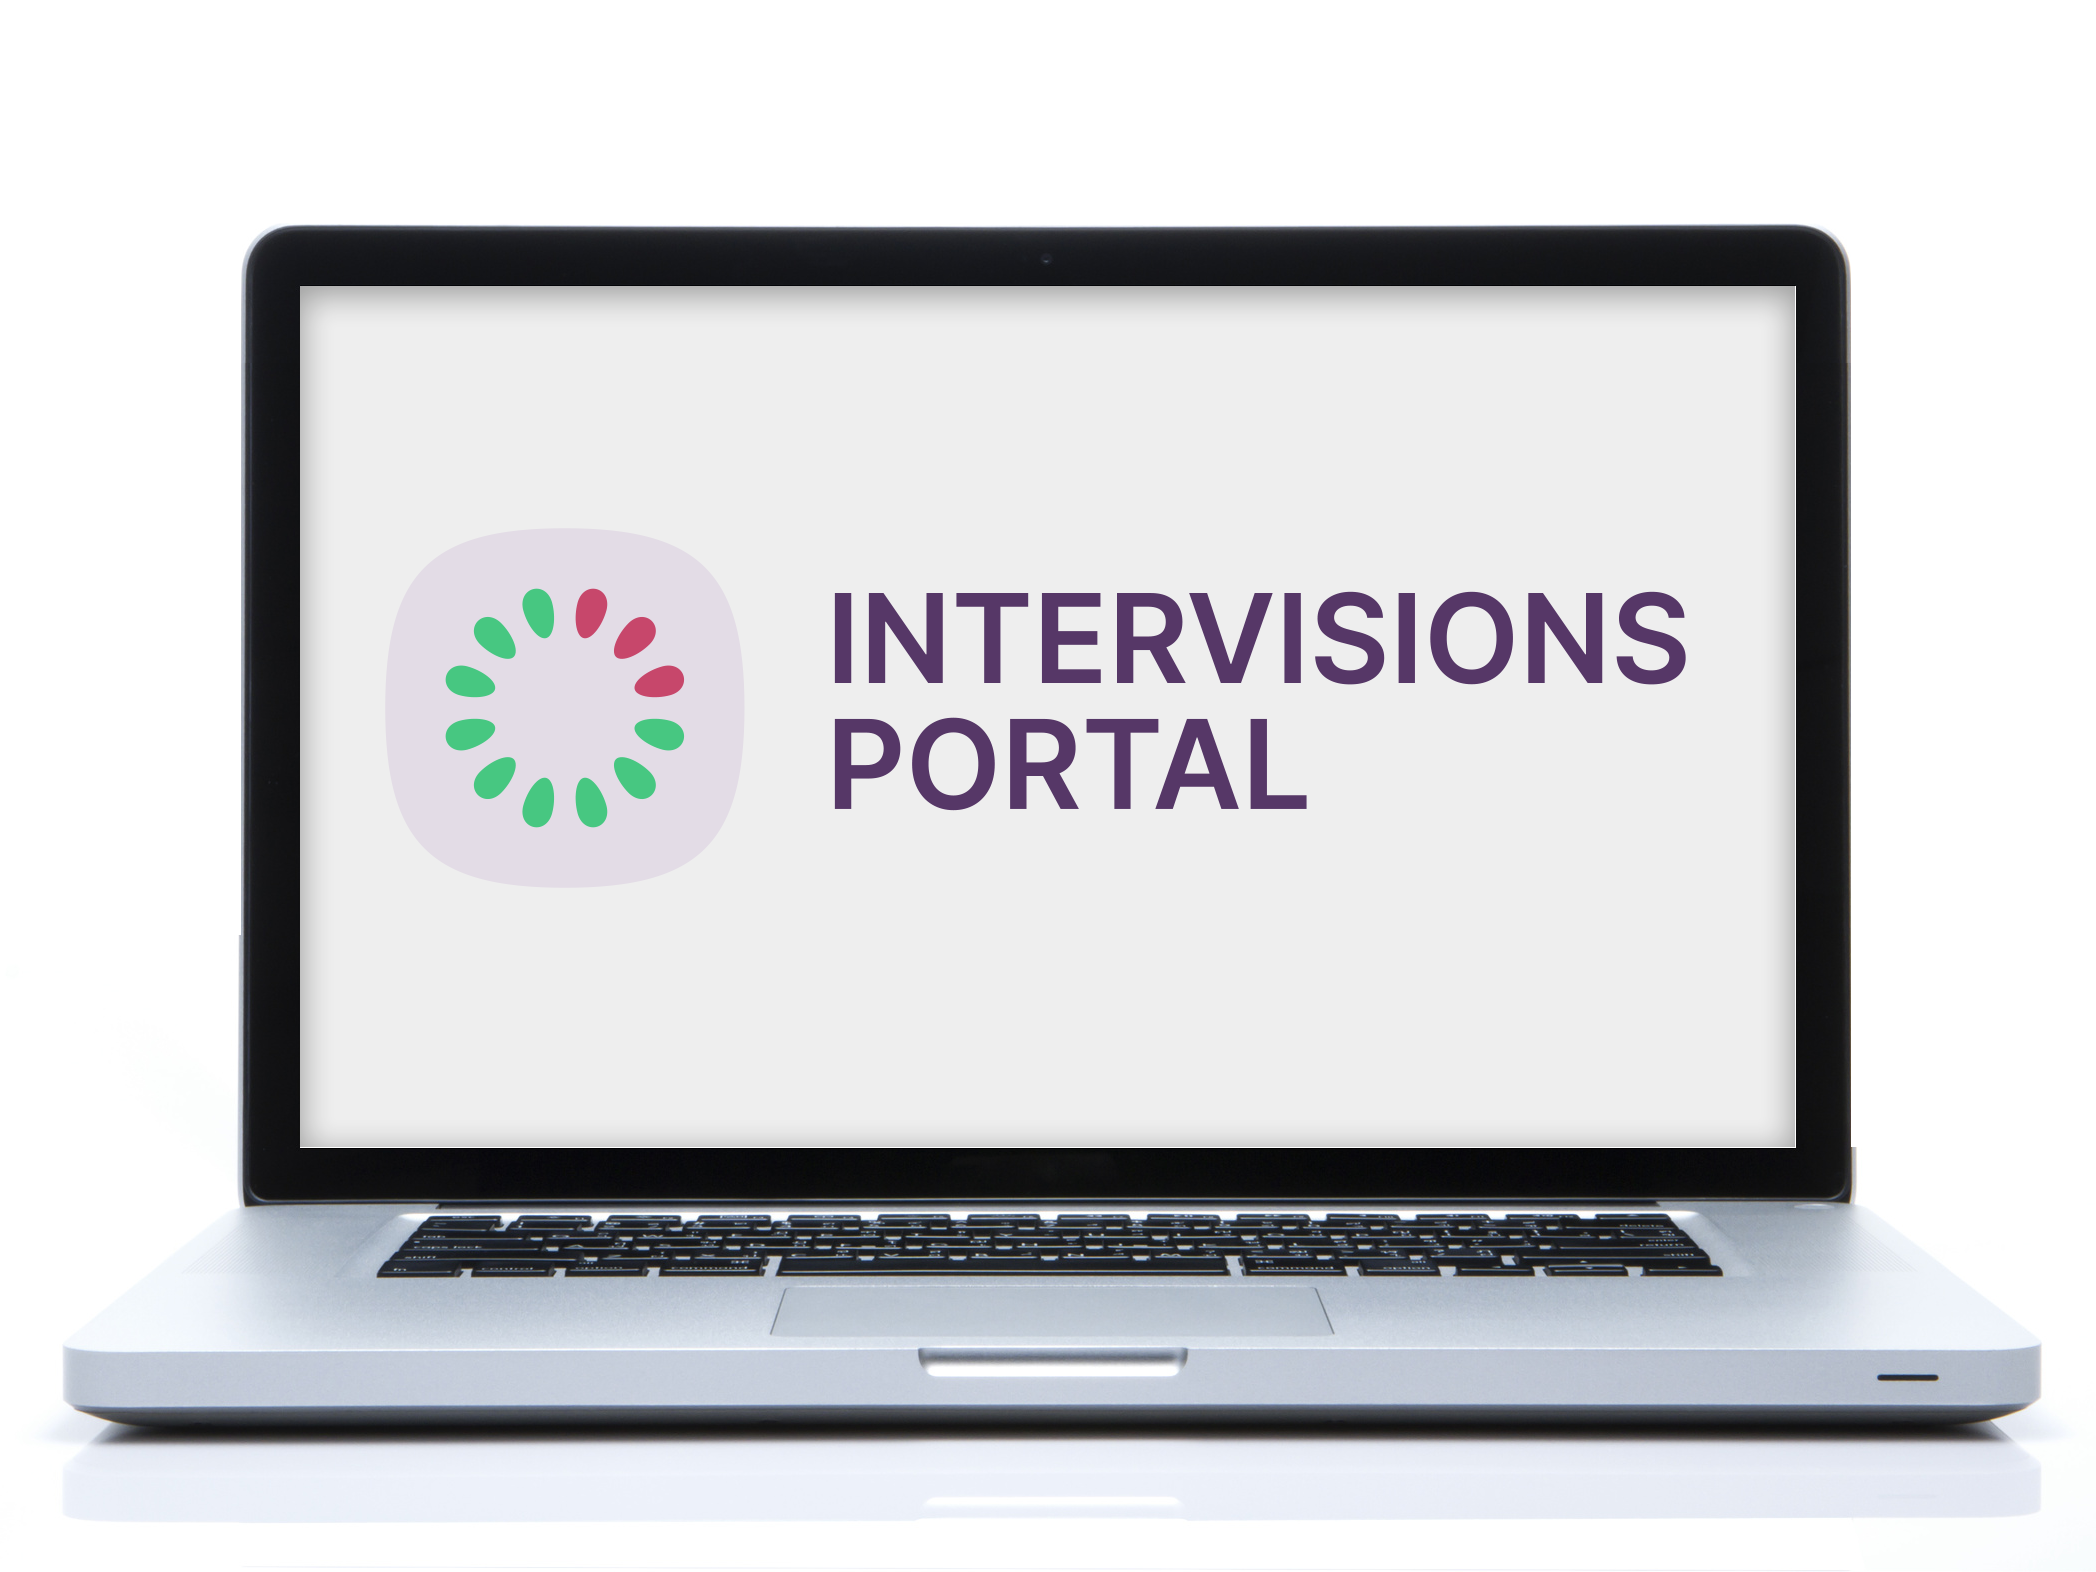 Intervisionsportal